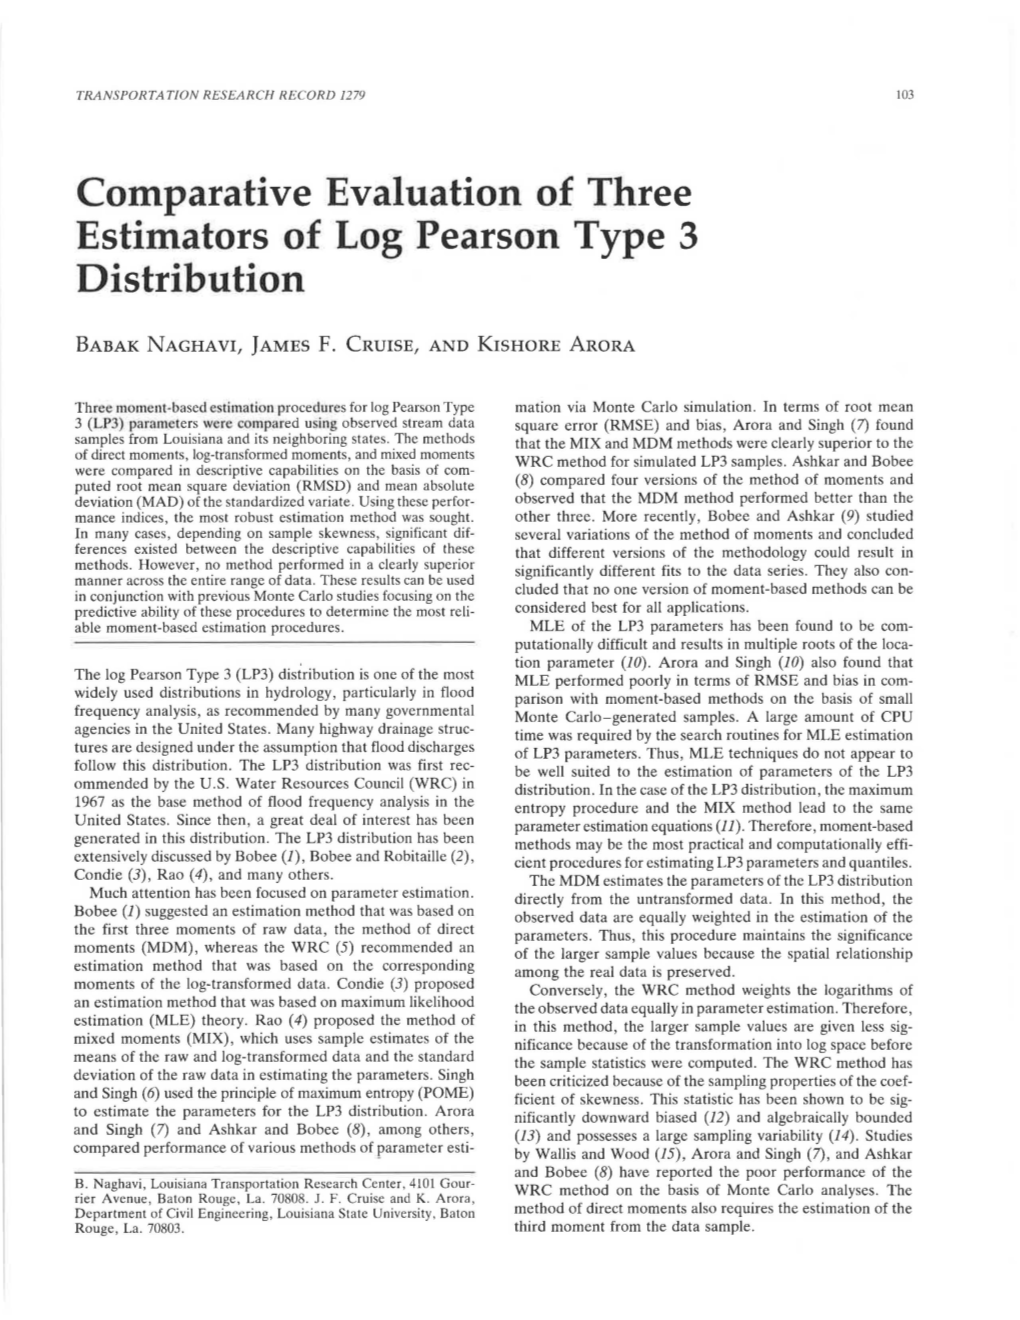 Comparative Evaluation of Three Estimators of Log Pearson Type 3 Distribution